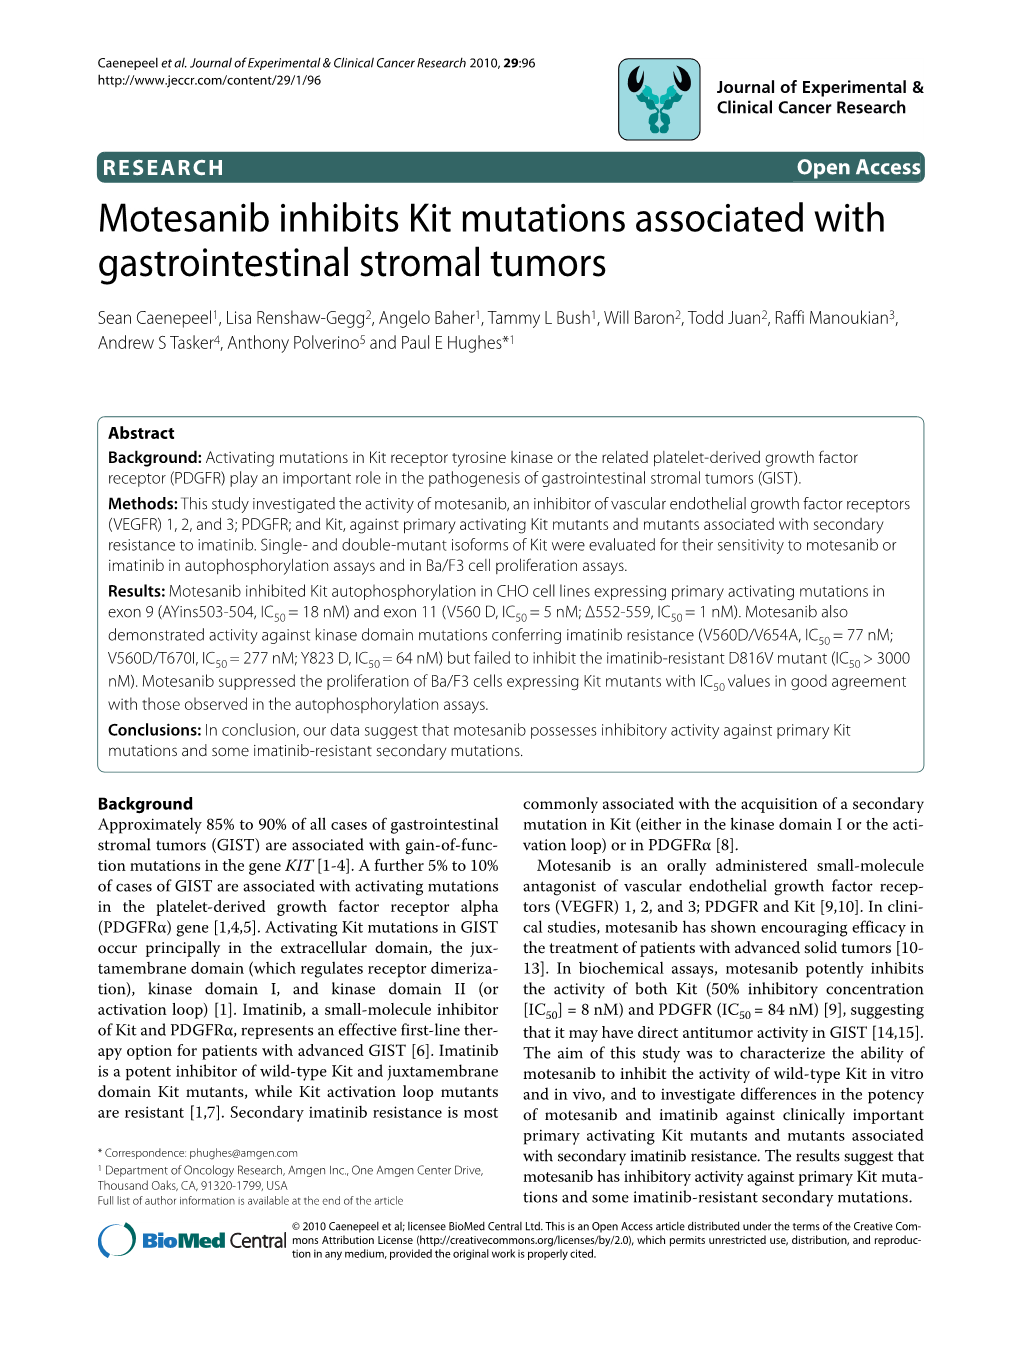 Motesanib Inhibits Kit Mutations Associated with Gastrointestinal